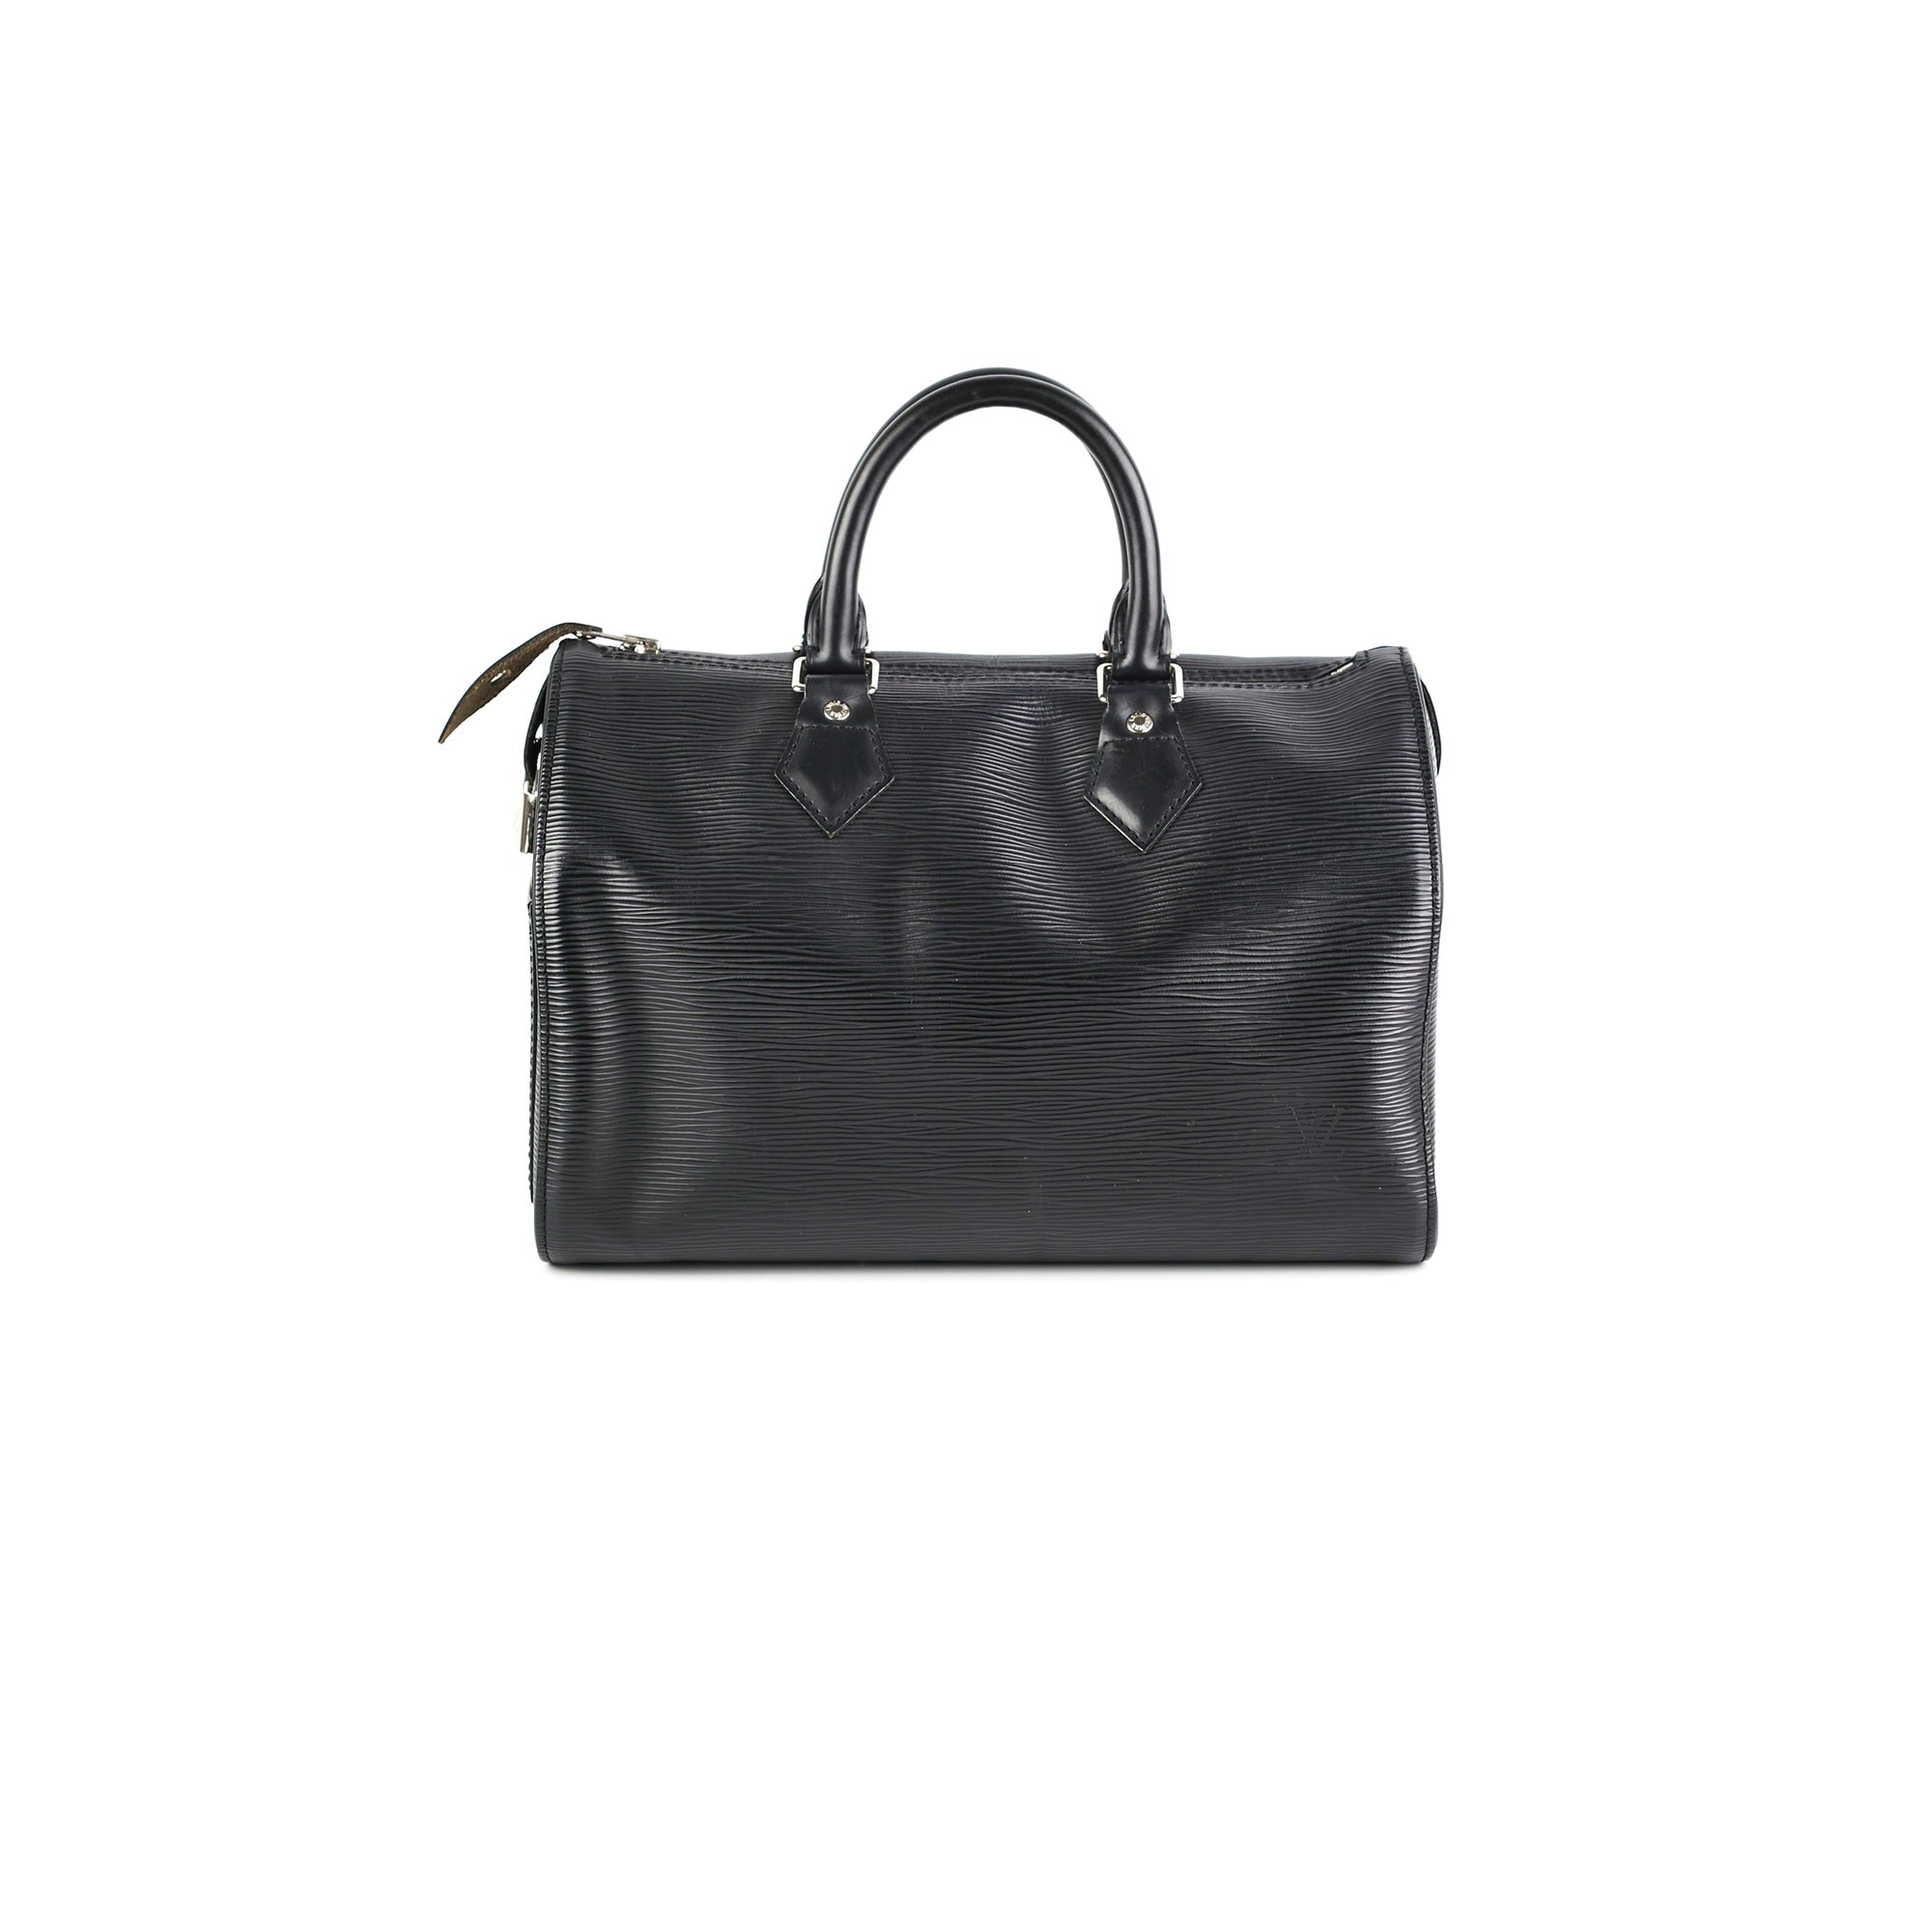 LOUIS VUITTON Louis Vuitton Epi Speedy 30 Handbag Boston Bag Leather Noir  Black M59022